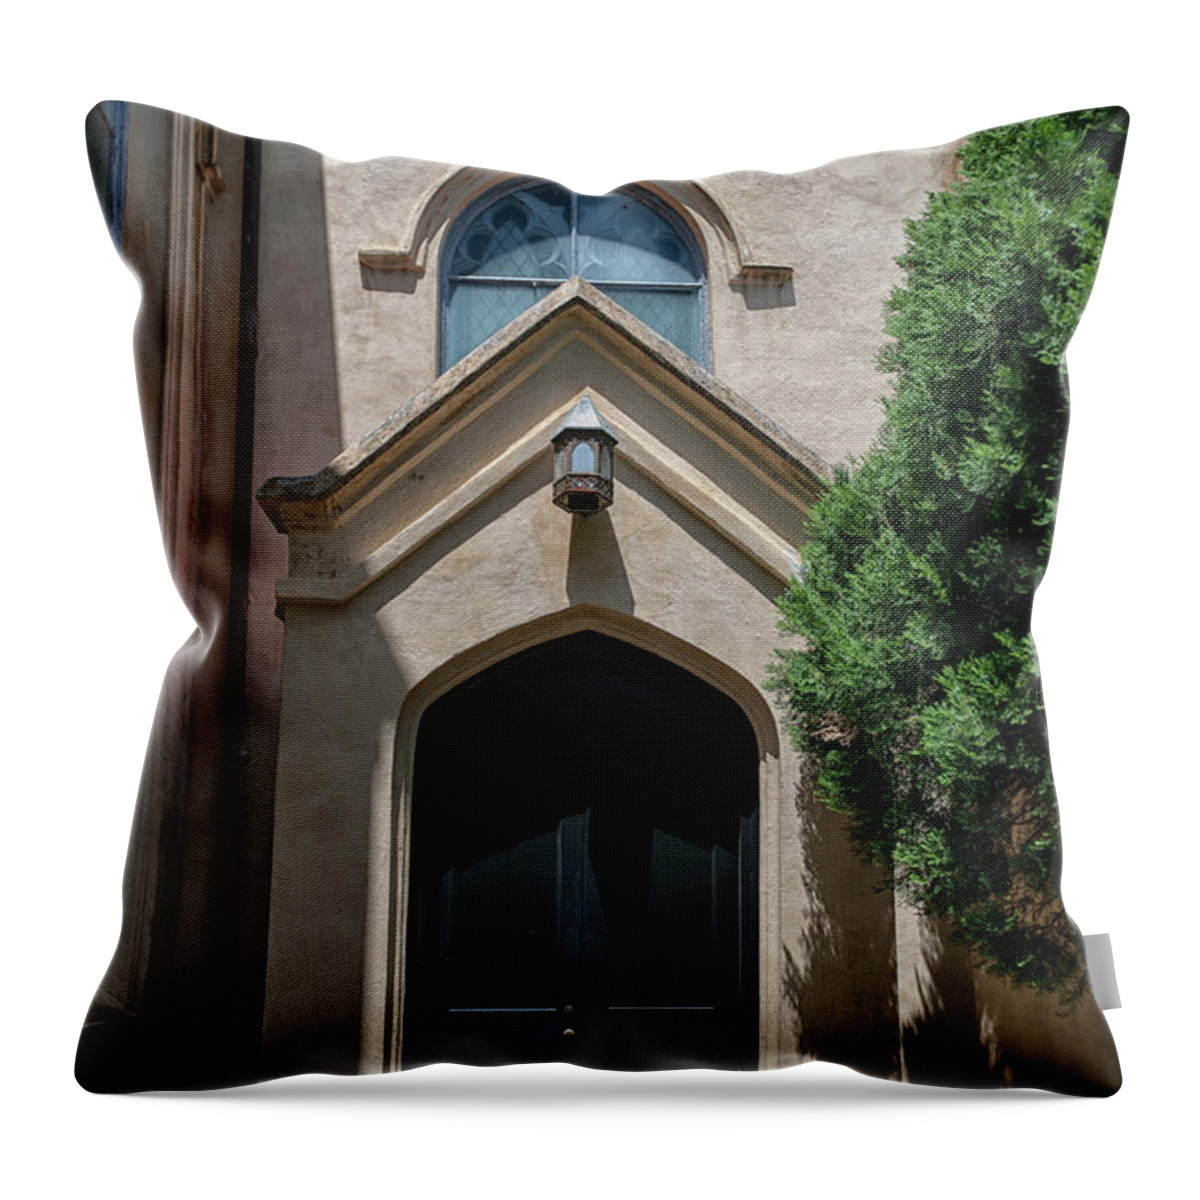 Unitarian Church Throw Pillow featuring the photograph Unitarian Church Door by Dale Powell